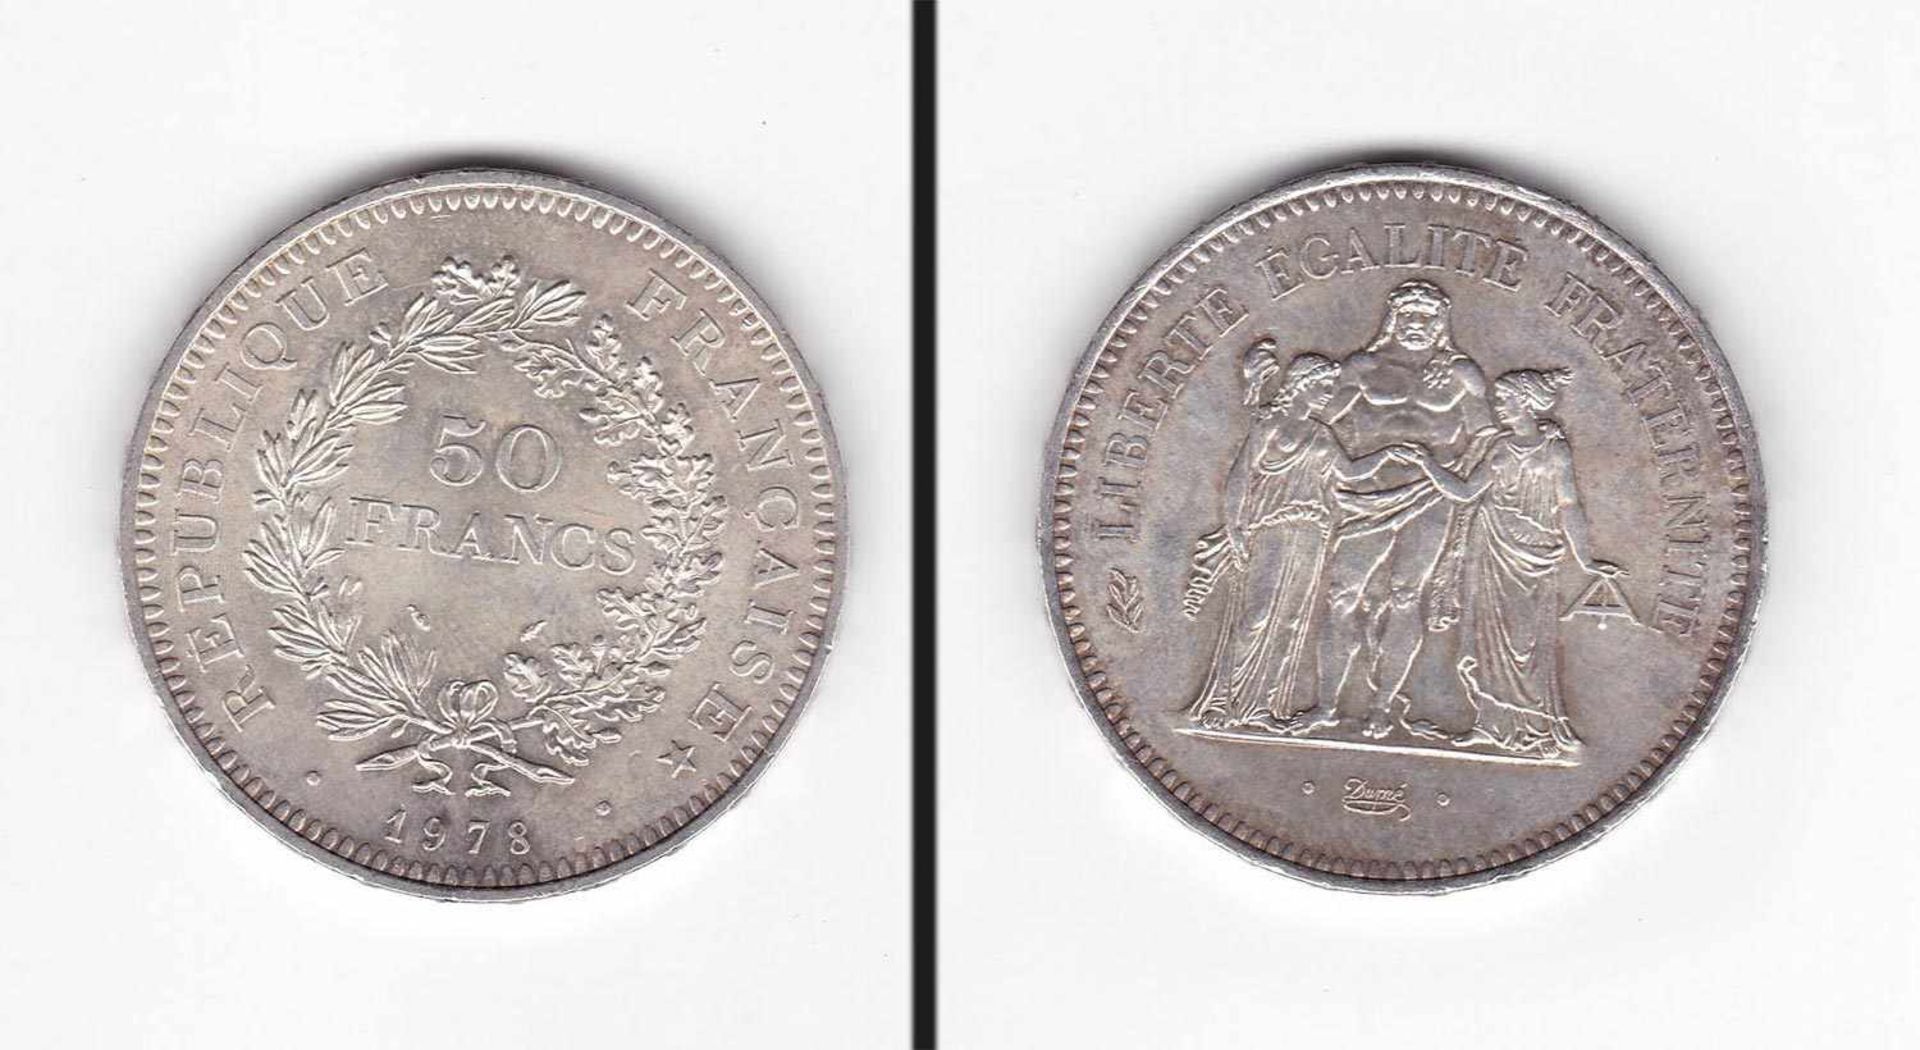 50 Francs Frankreich 1978, Herkulesgruppe, Silber